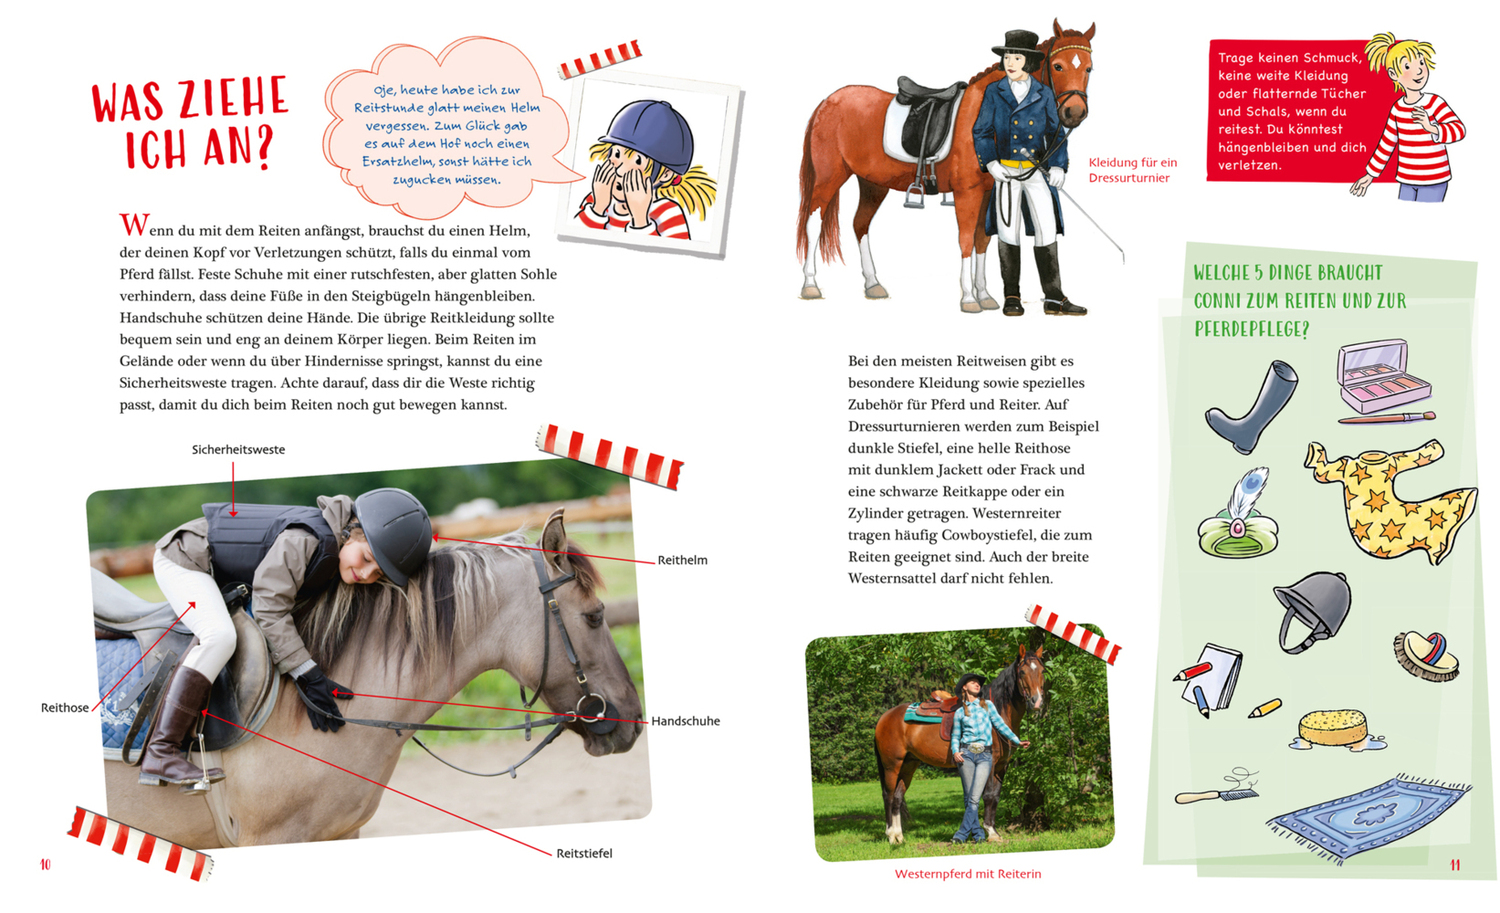 Bild: 9783551518996 | Conni-Themenbuch: Das große Conni-Pferdebuch | Julia Boehme (u. a.)